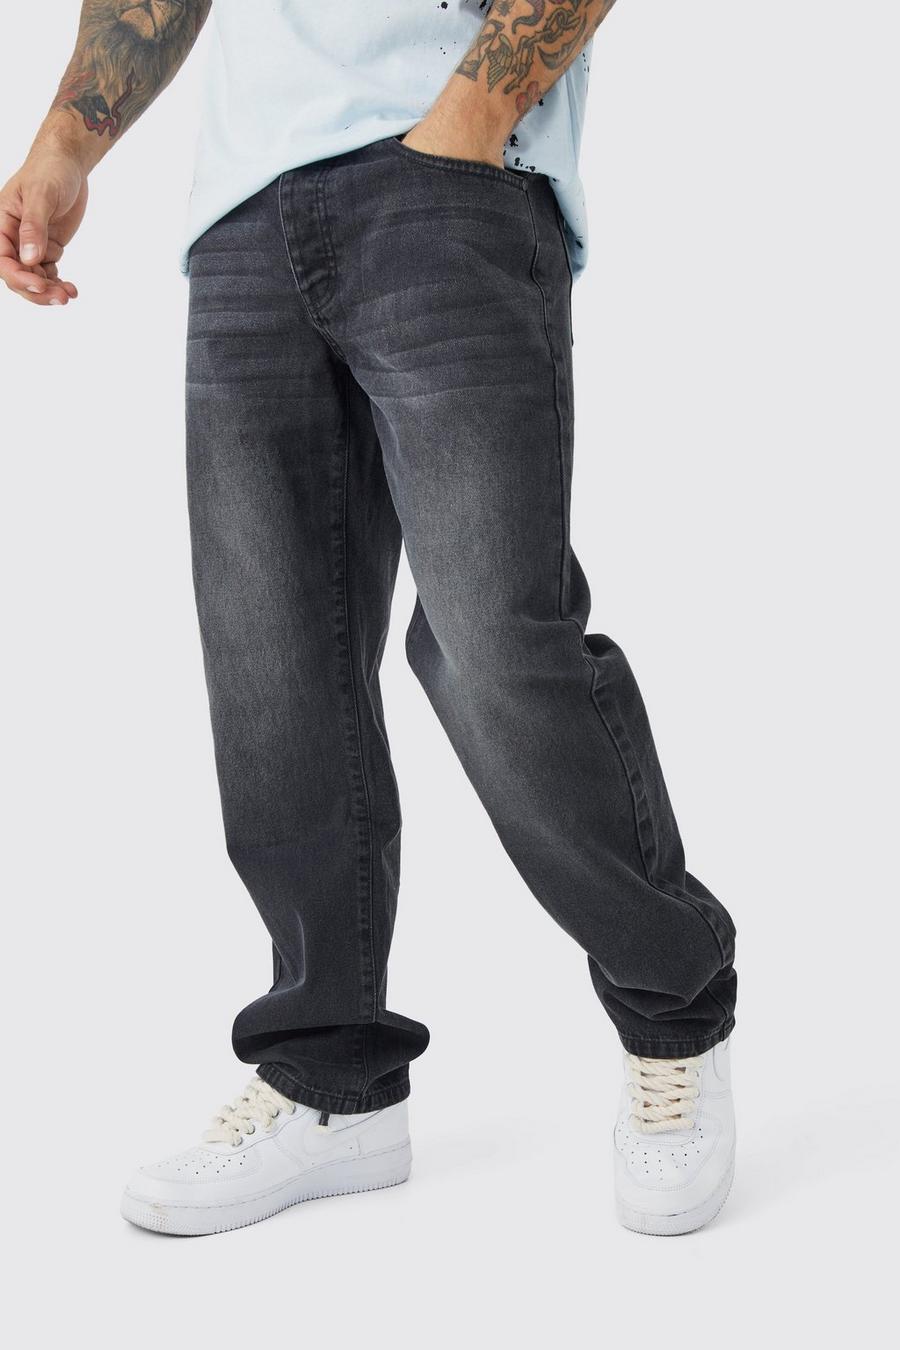 boohooMAN Men's Relaxed Rigid Shine Monogram Jeans